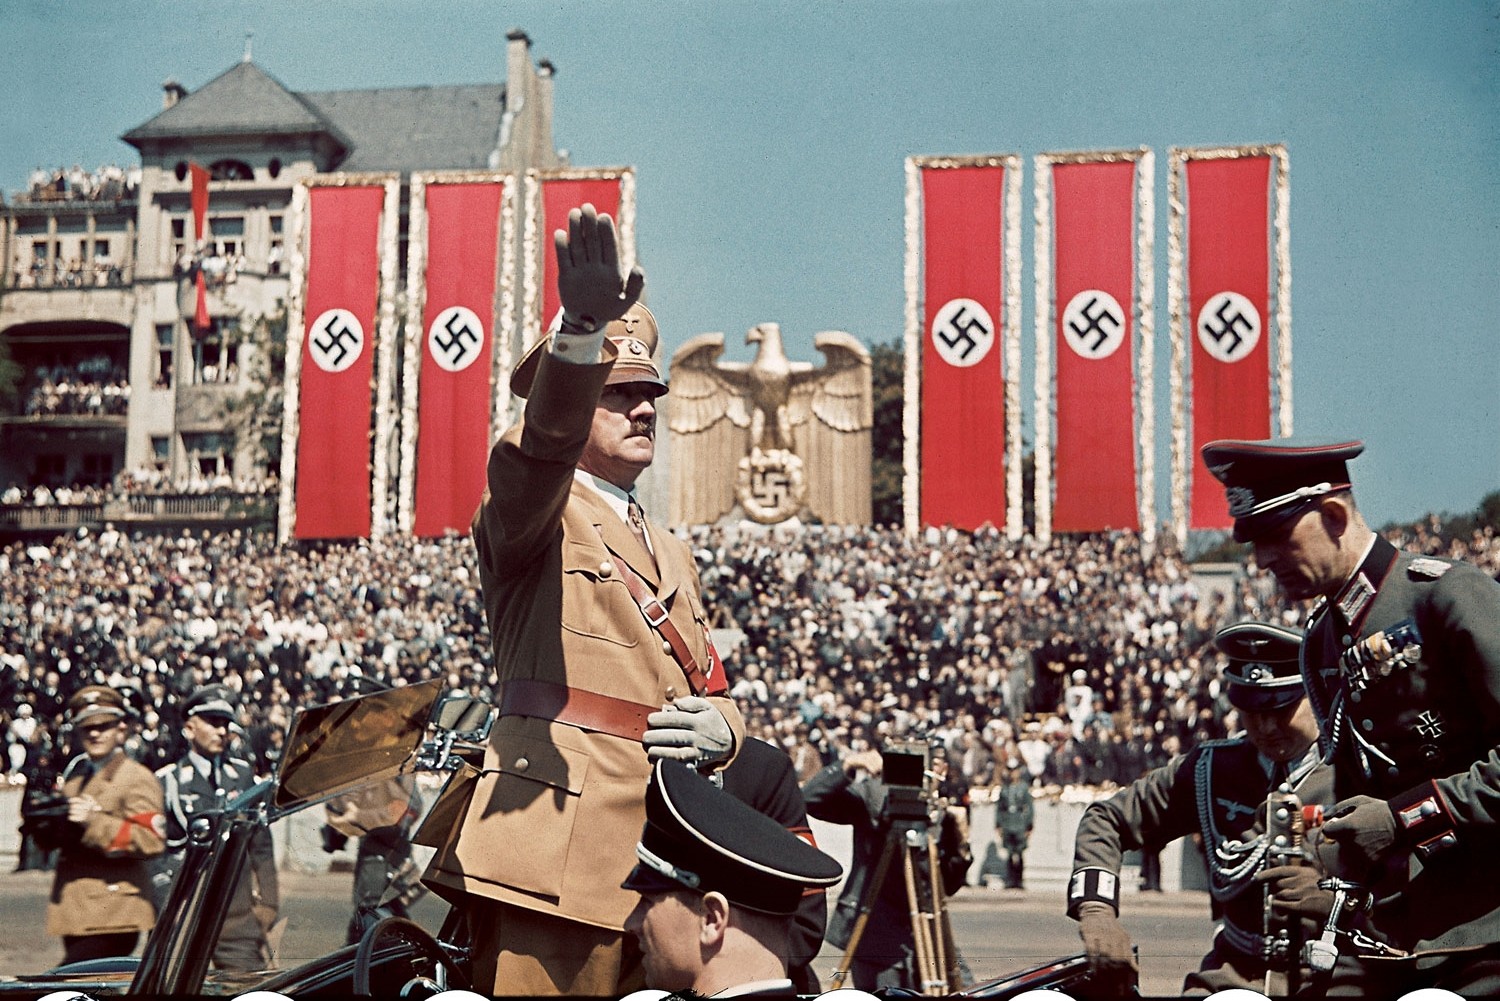 Hitler salutira okupljenim nacistima tokom vojne parade u Berlinu 1939. (Foto: Hugo Jaeger/Time & Life Pictures/Getty Images)